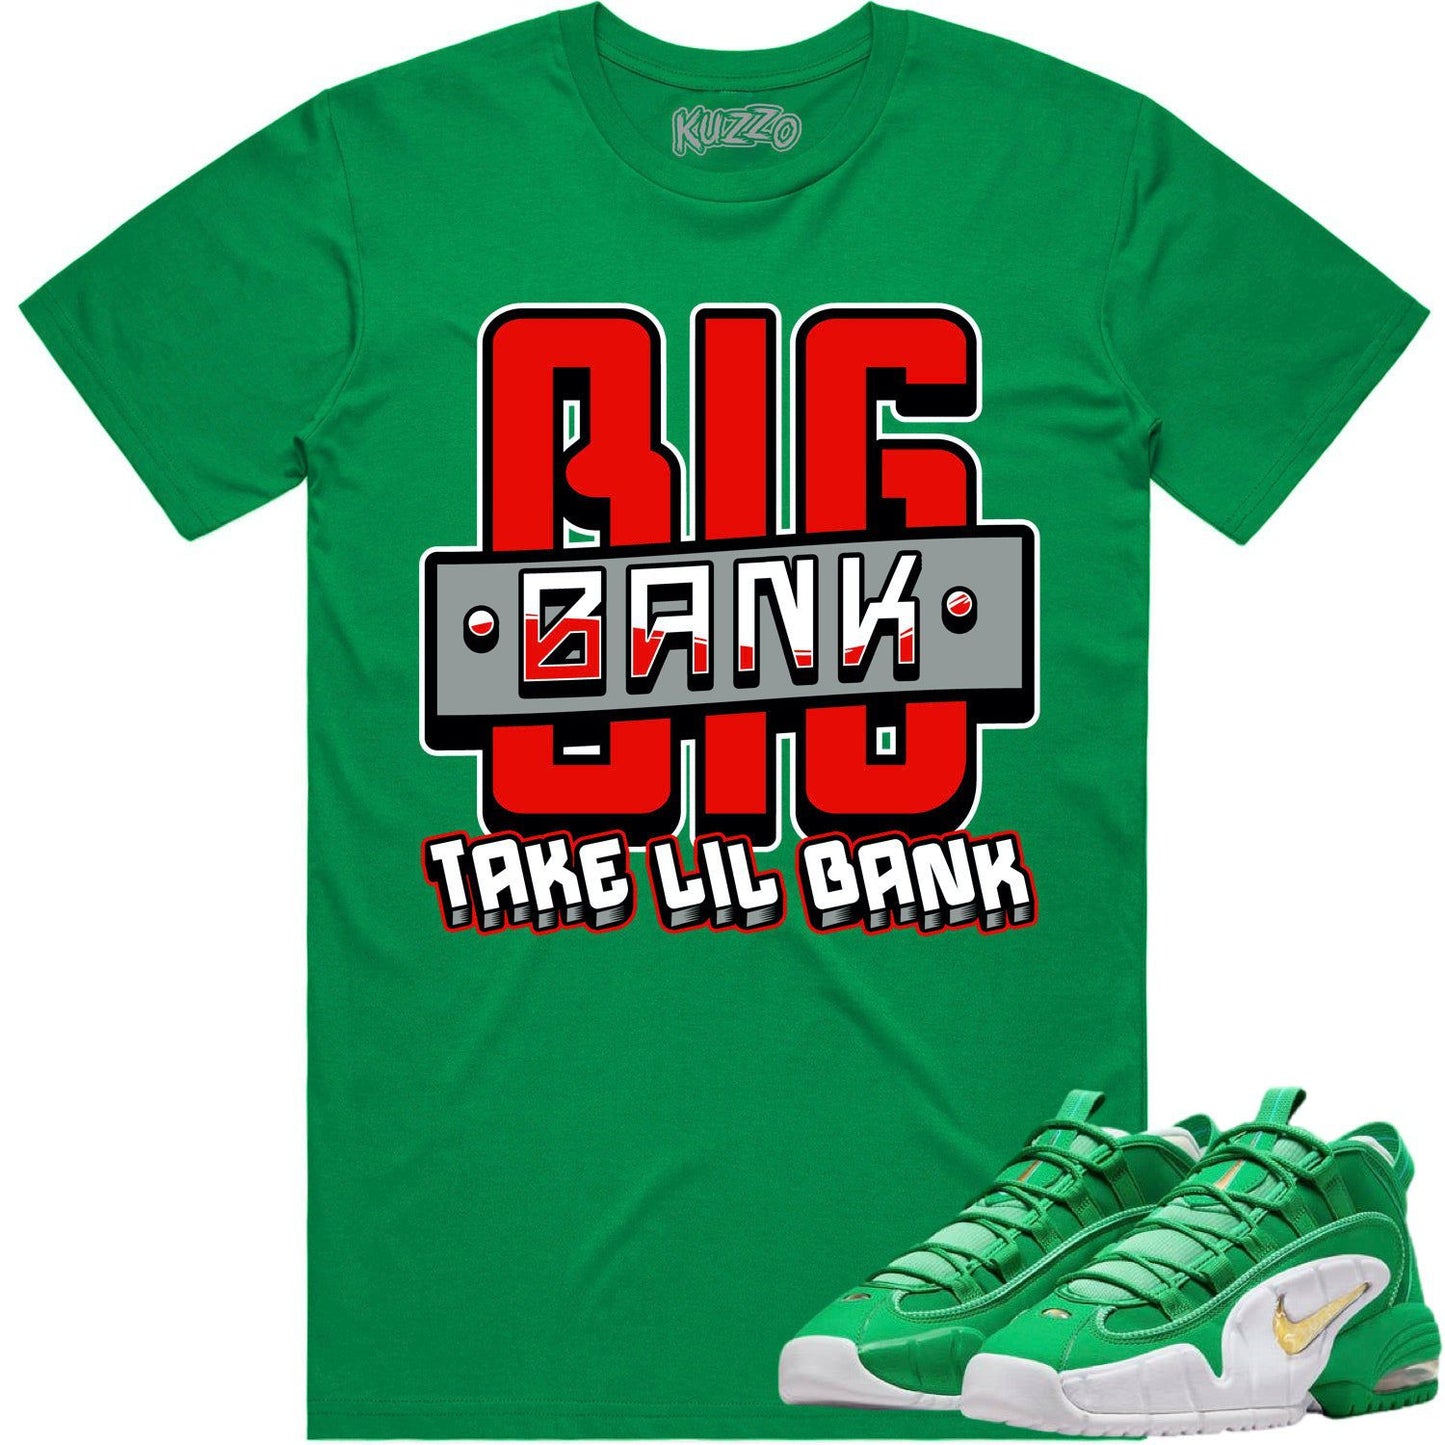 Penny 1 Stadium Green 1s Shirt - Sneaker Tees - Red Big Bank